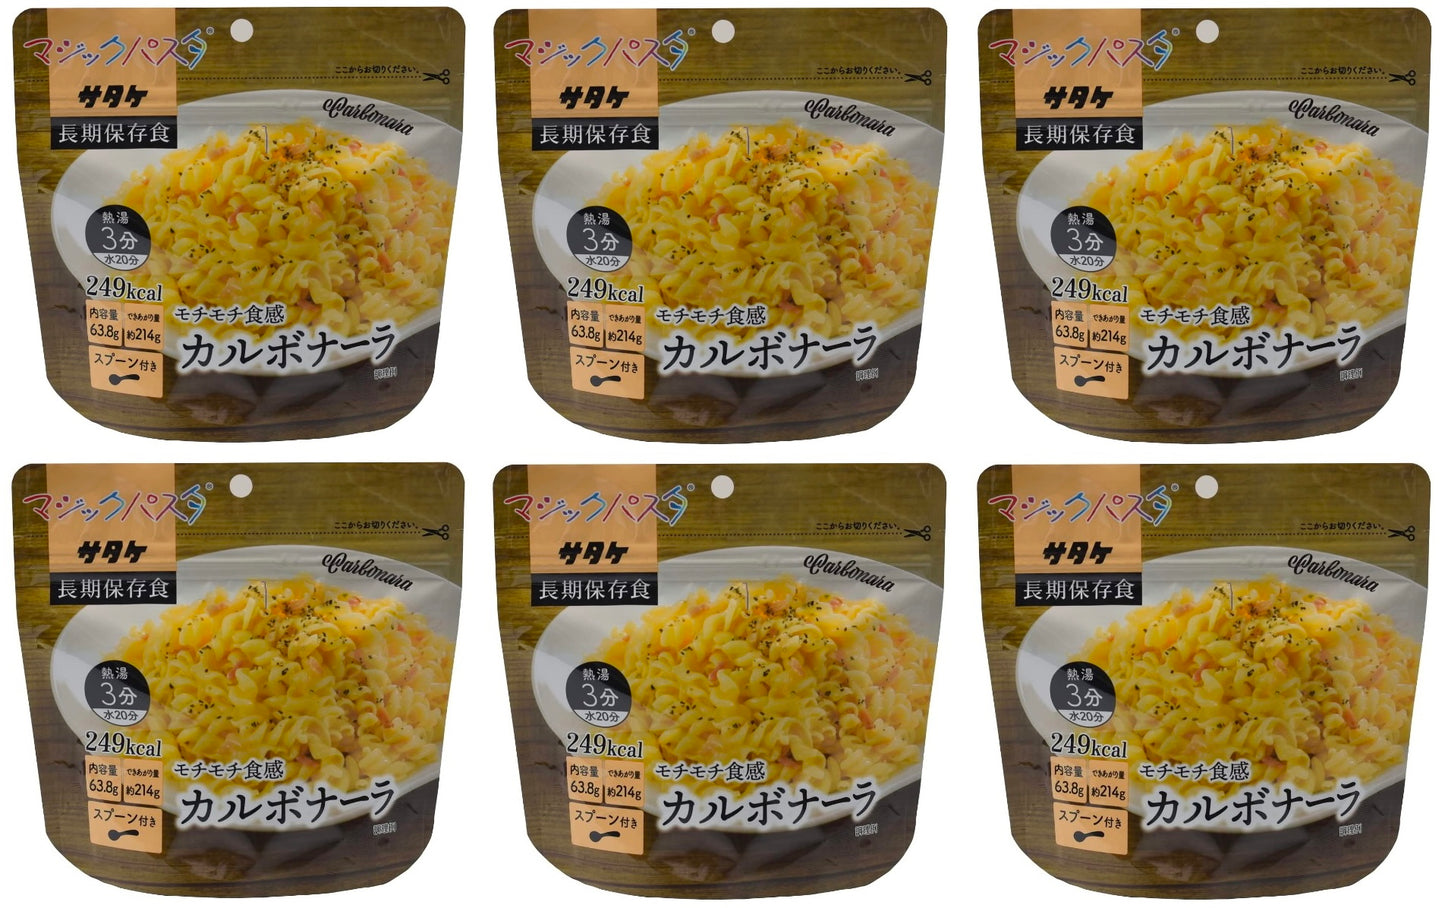 JAPAN Pasta Noodles Carbonara Spaghetti Instant Preserved Sauce Food Pepper 214g